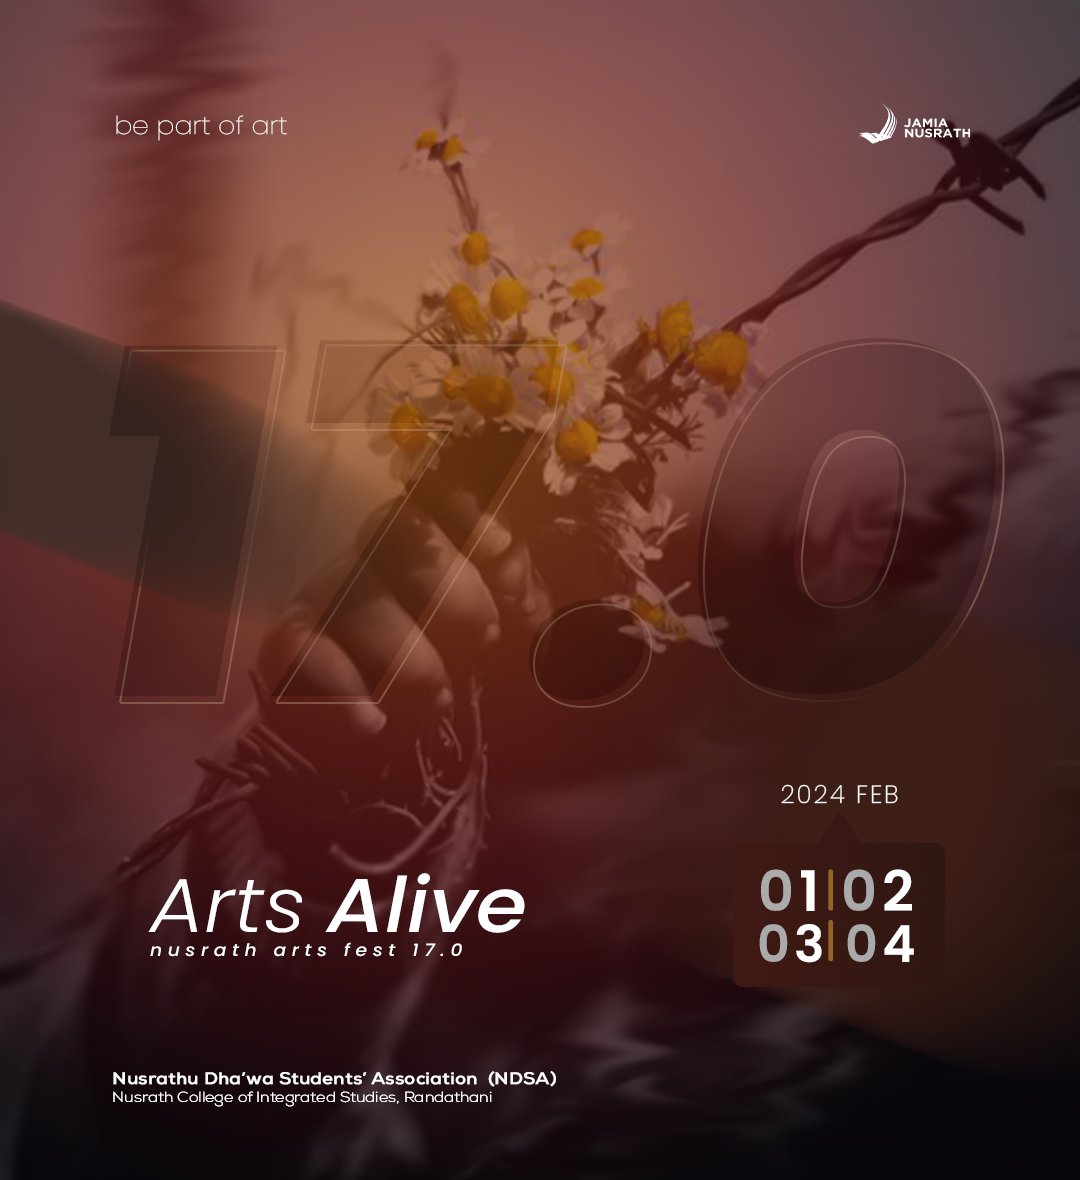 be part of art
Arts Alive 17.0 
Nusrath arts fest
2024 FEB 01,02,03,04
 
#arts_alive
#nusrath_arts_fest
#be_part_of_art
#17thedition
#jamia_nusrath 
#ndsa